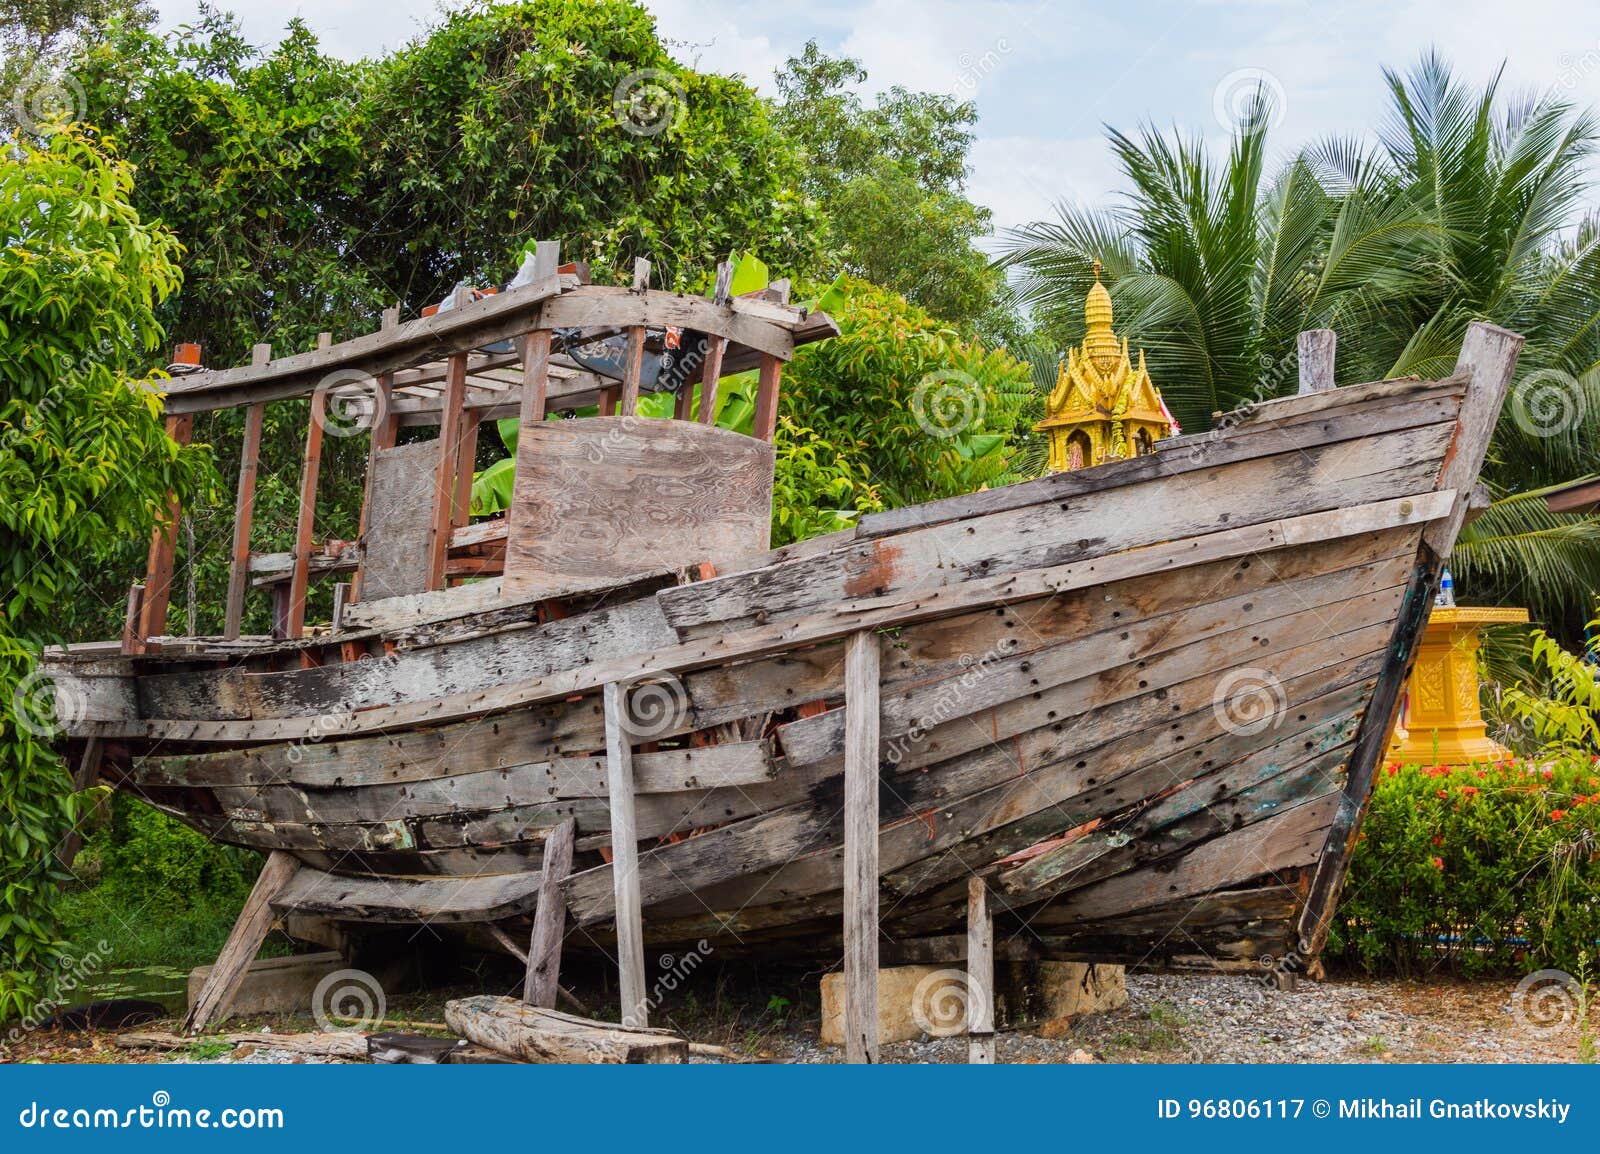 https://thumbs.dreamstime.com/z/old-wooden-fishing-boat-garden-as-decoration-item-thailand-village-96806117.jpg